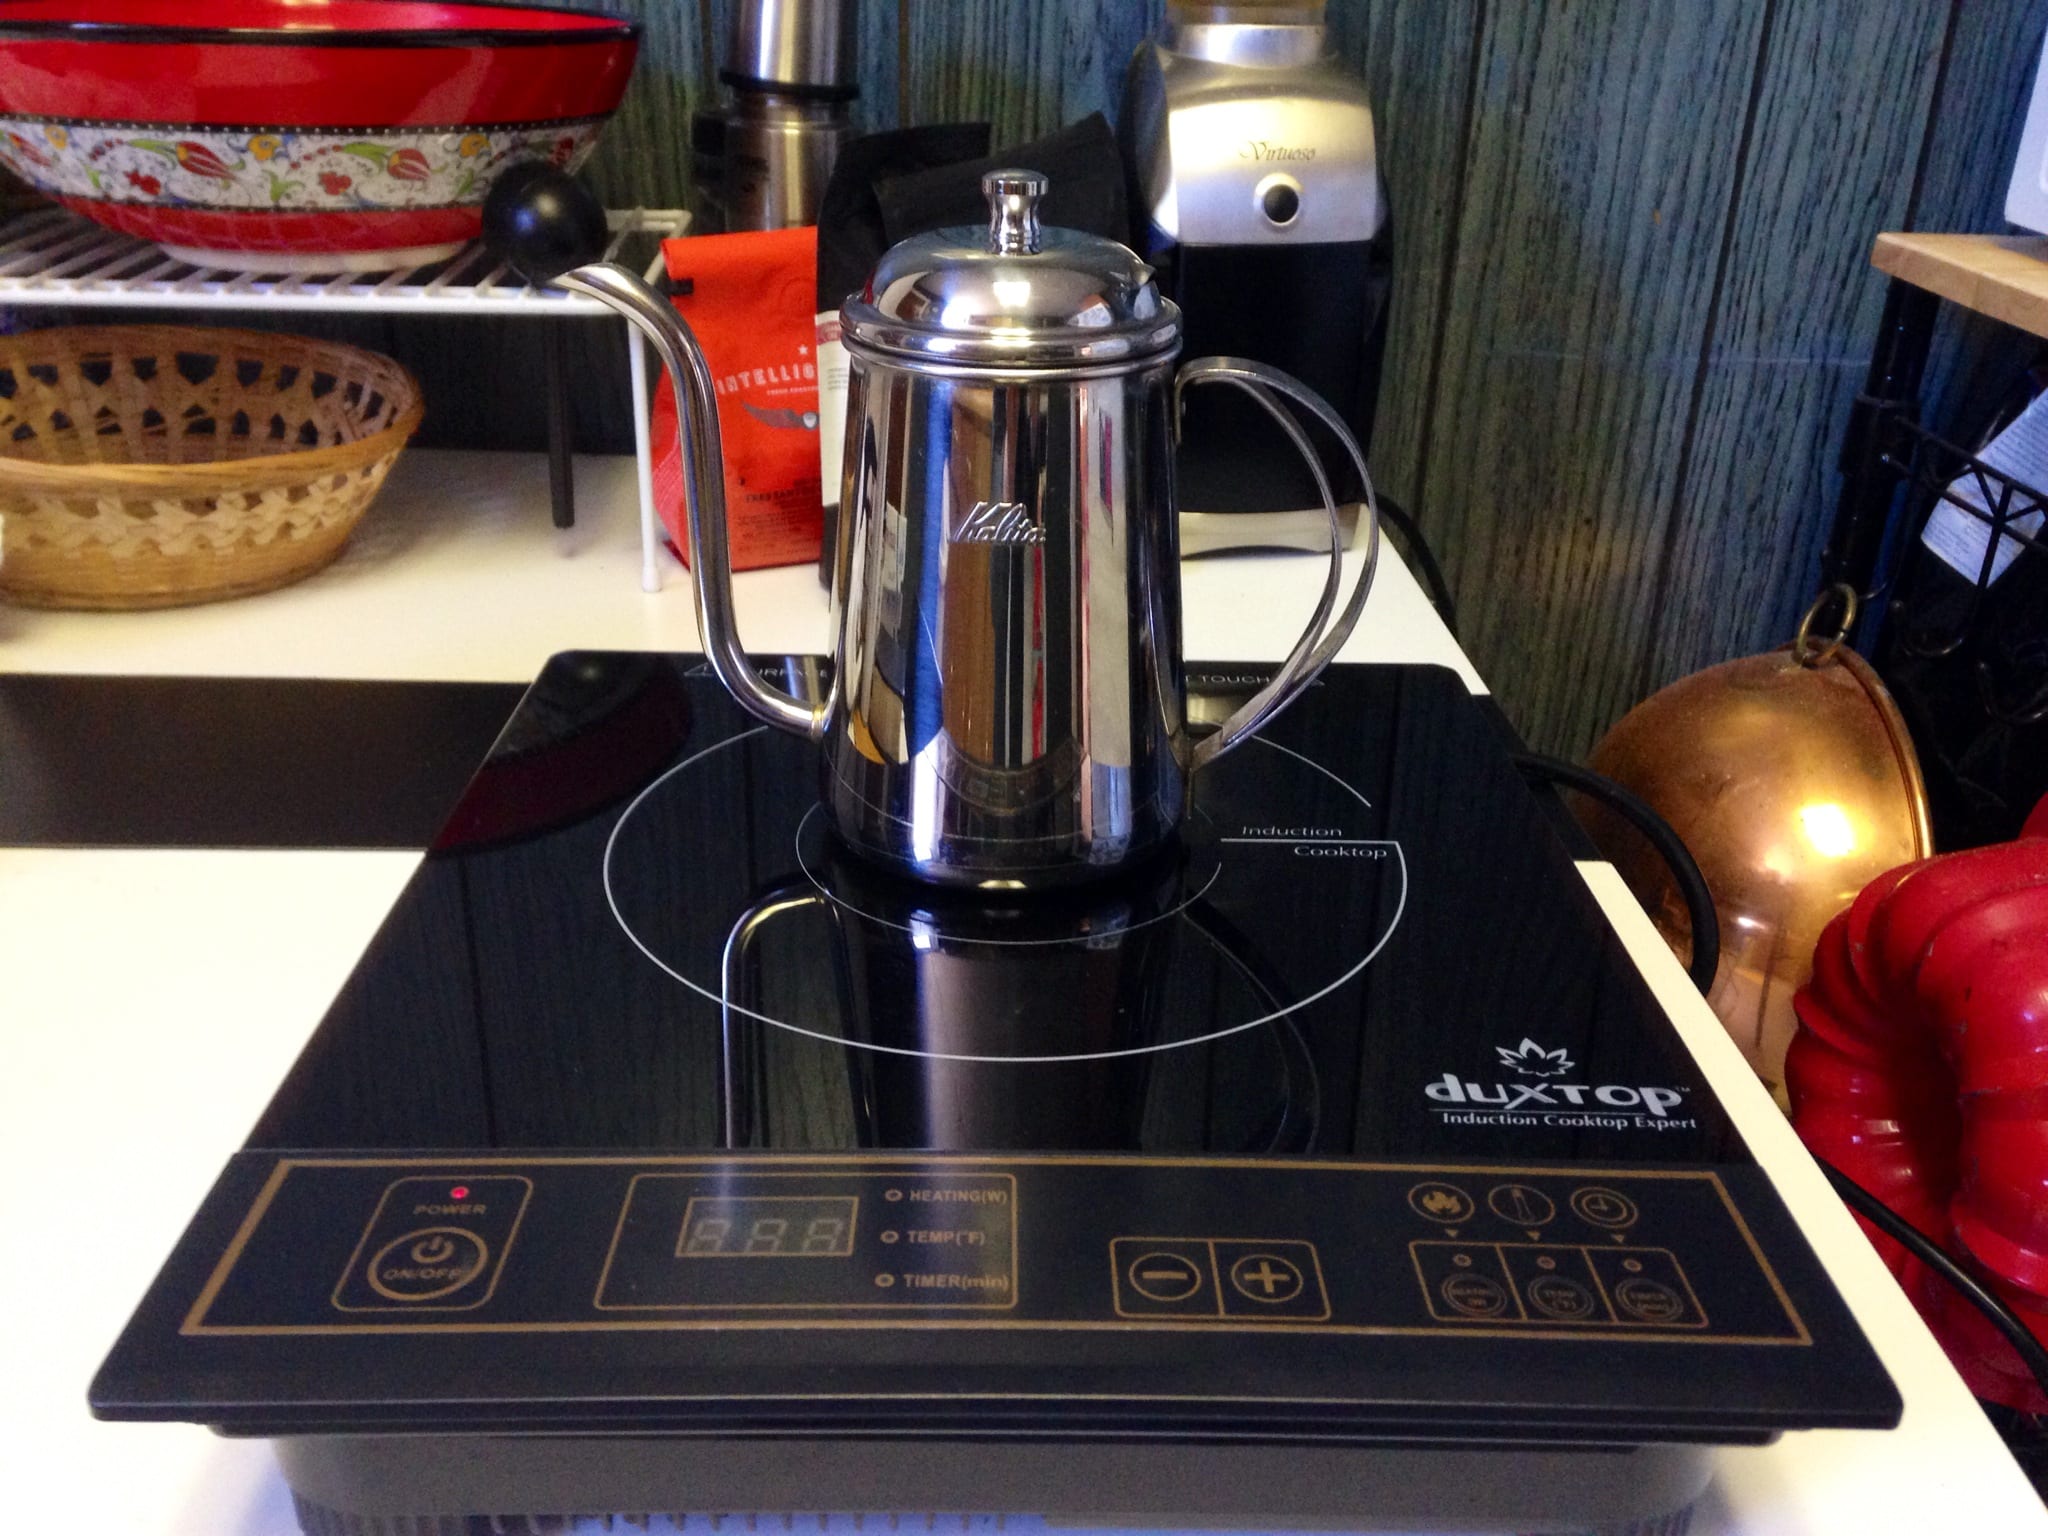 hi-tech coffee gadgets